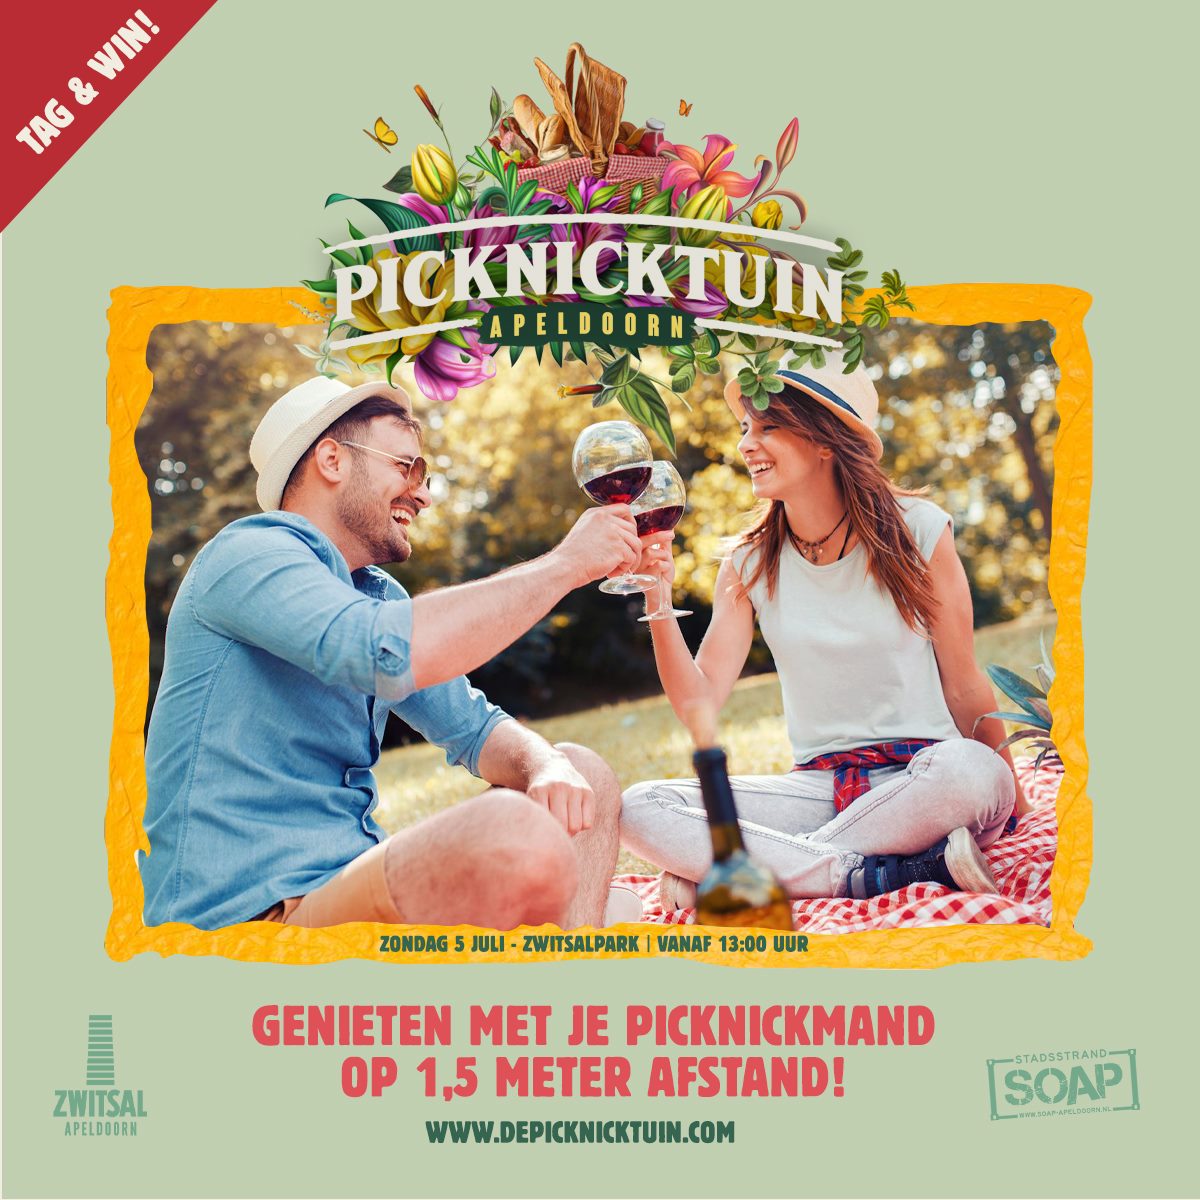 Picknicktuin Apeldoorn